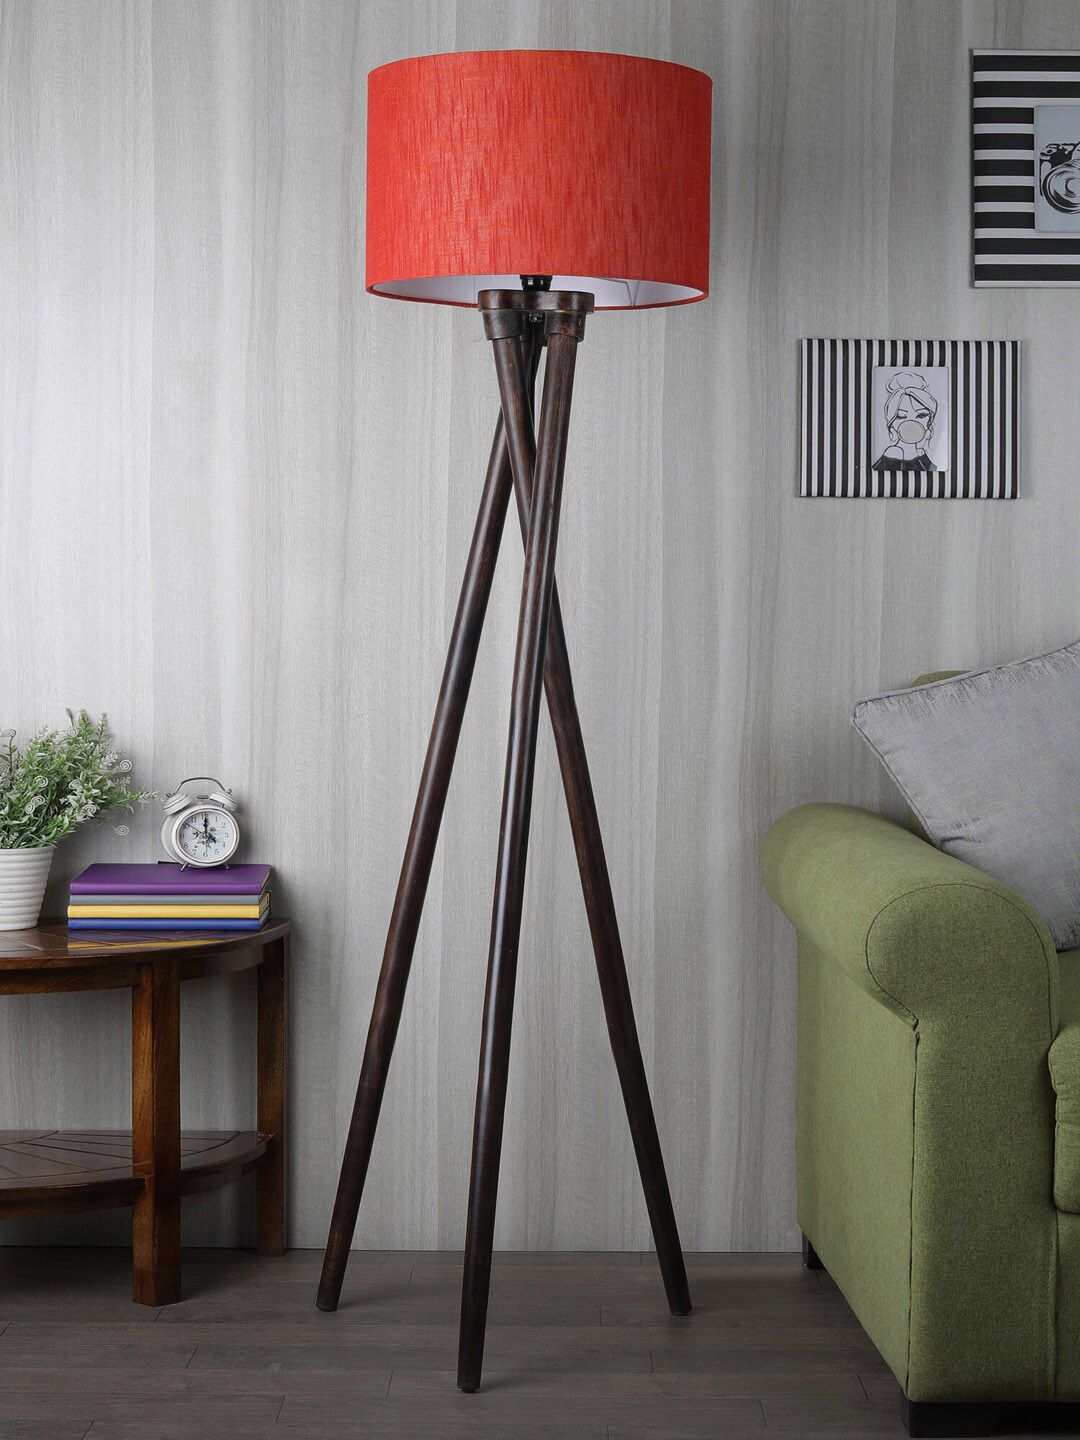 SANDED EDGE Red Metal Tripod Floor Lamp Price in India